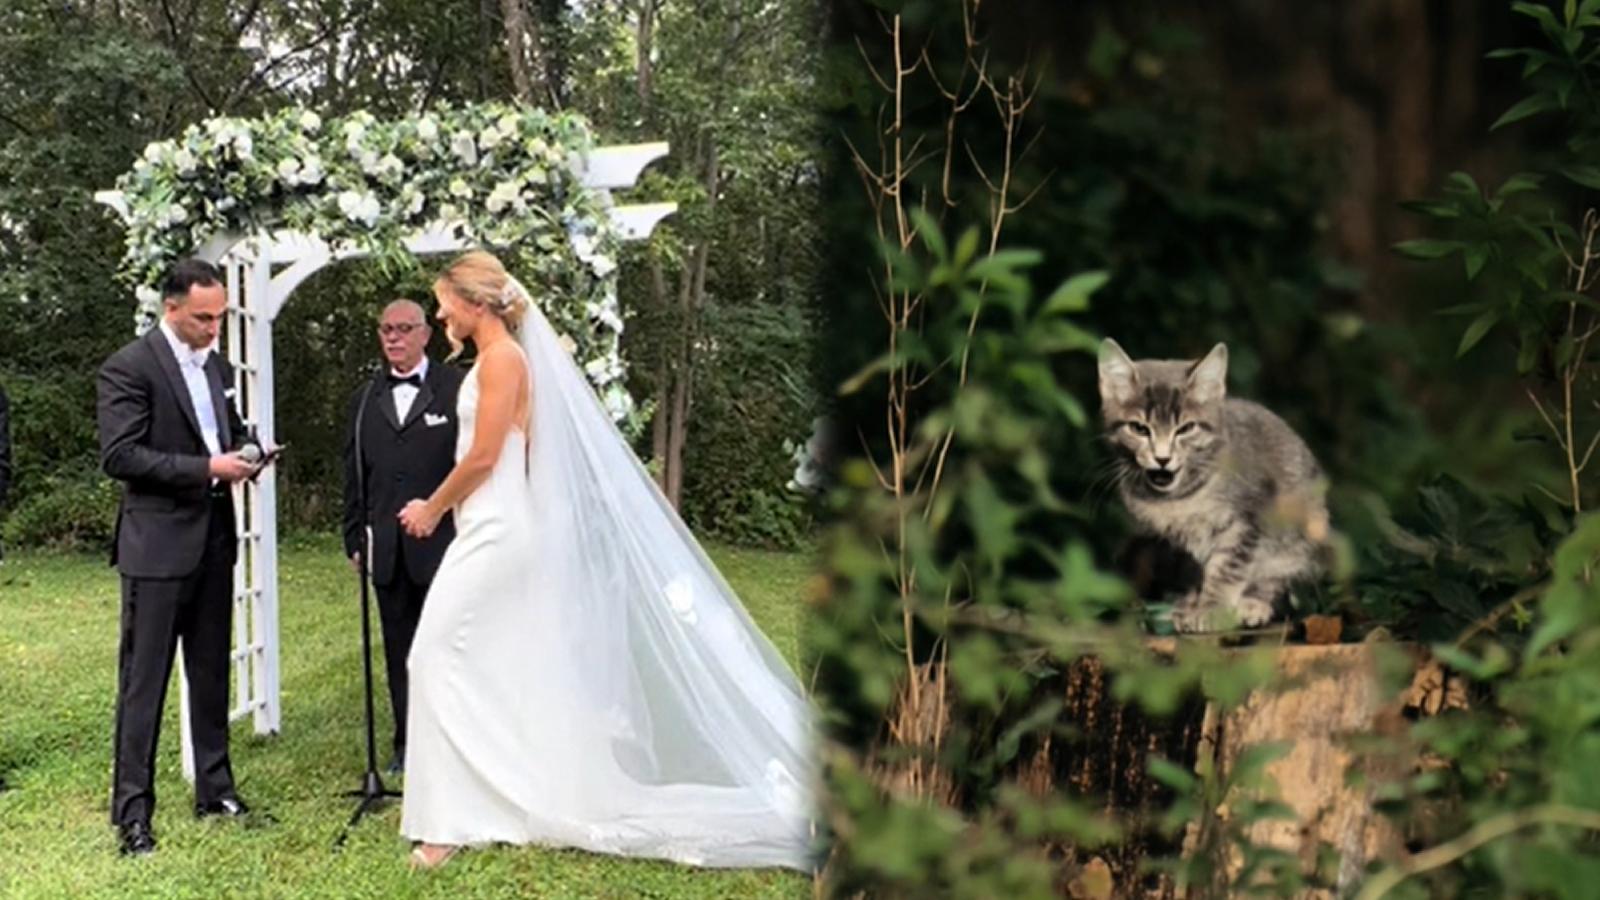 Couple adopts stray kitten who gate-crashed their wedding vows